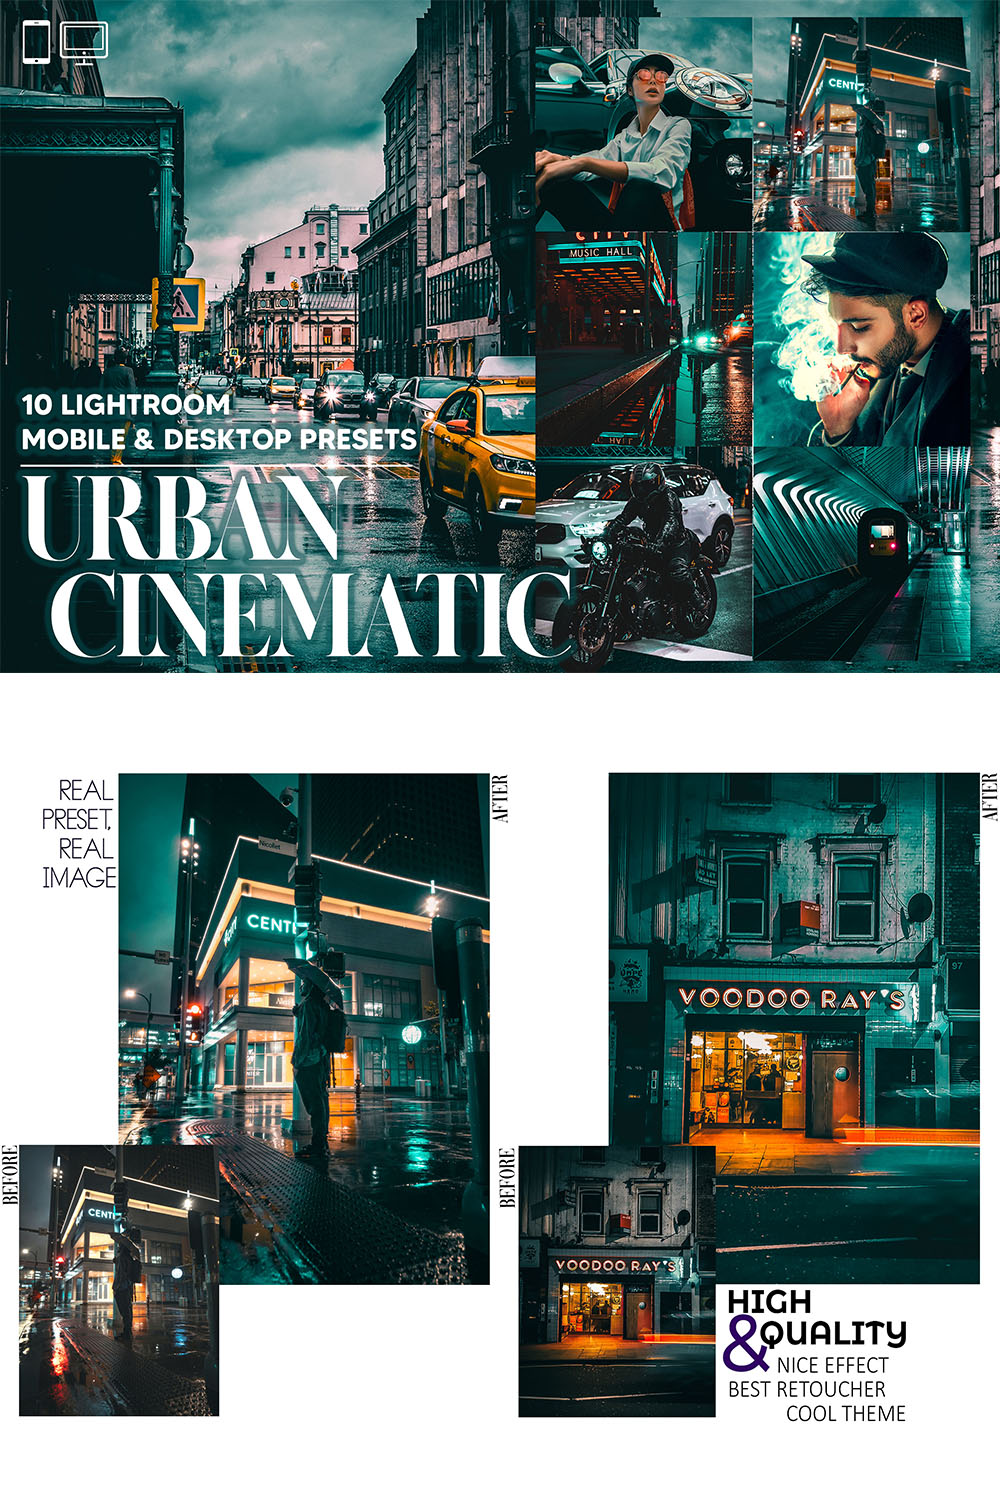 10 Urban Cinematic Lightroom Presets, Moody Film Mobile Preset, City Cinema Desktop Lifestyle Portrait Theme Instagram LR Filter DNG Natural pinterest preview image.